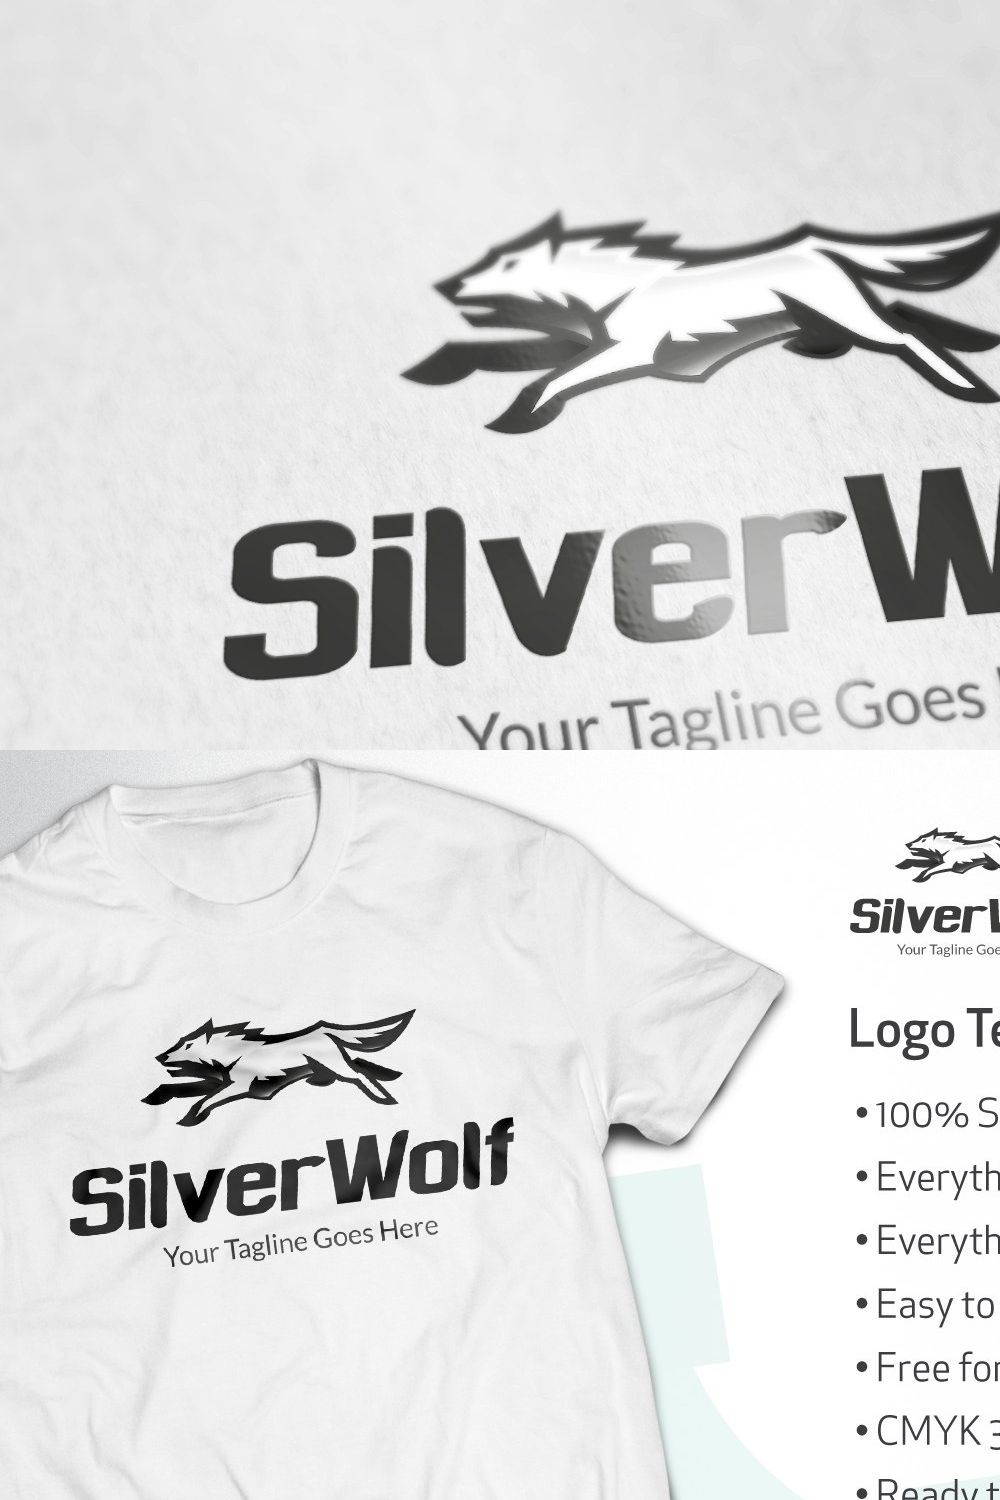 silverwolf logo pinterest preview image.